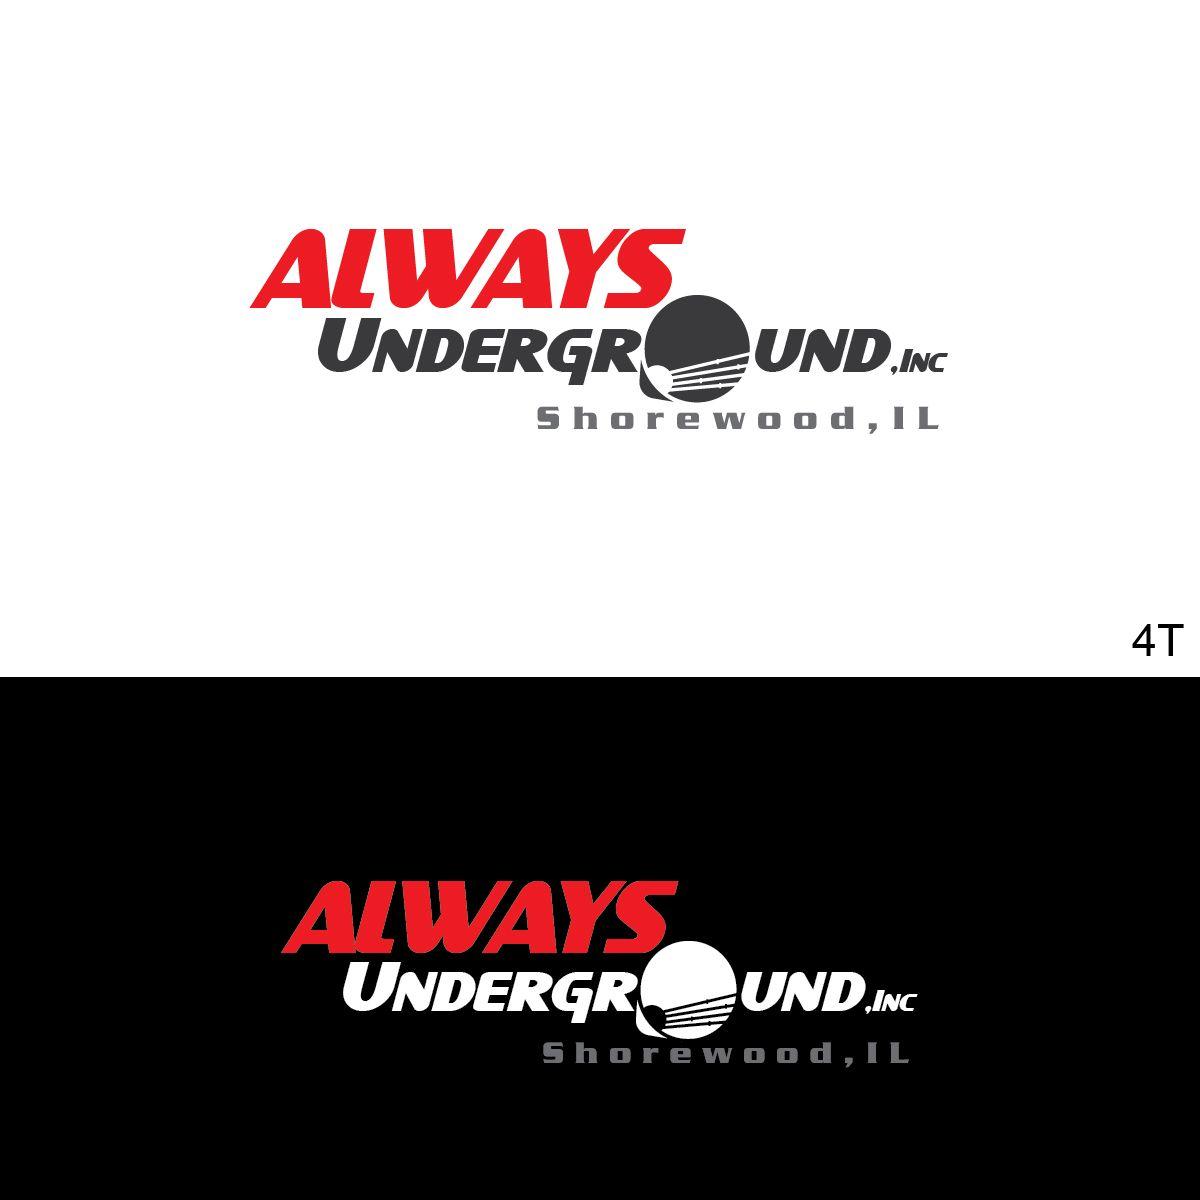 Underground Construction Company Logo - Bold, Serious, Construction Company Logo Design for AUI Always